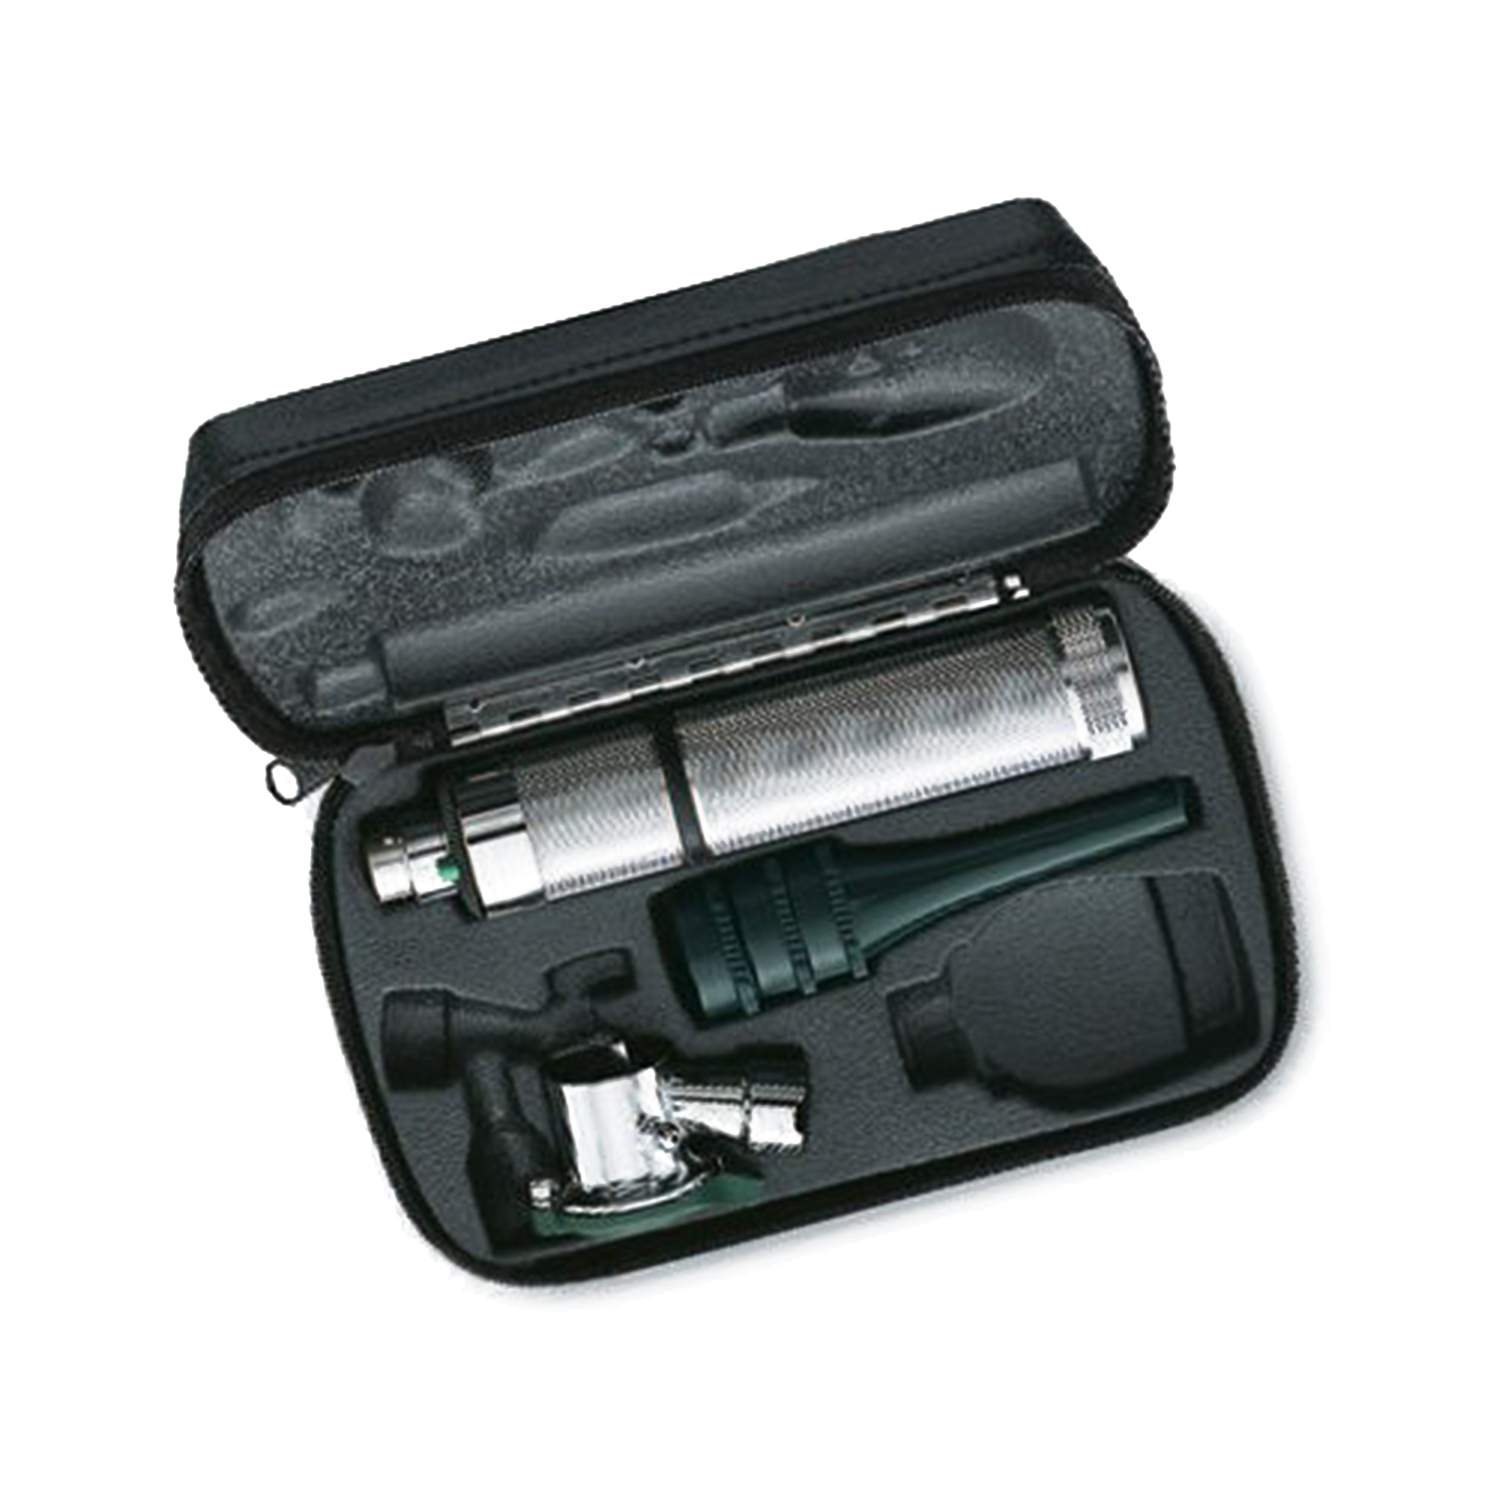 MacroView Otos with Throat Illuminator Set, Recharg. Nickel-Cadmium Convertible Handle and Hard Case